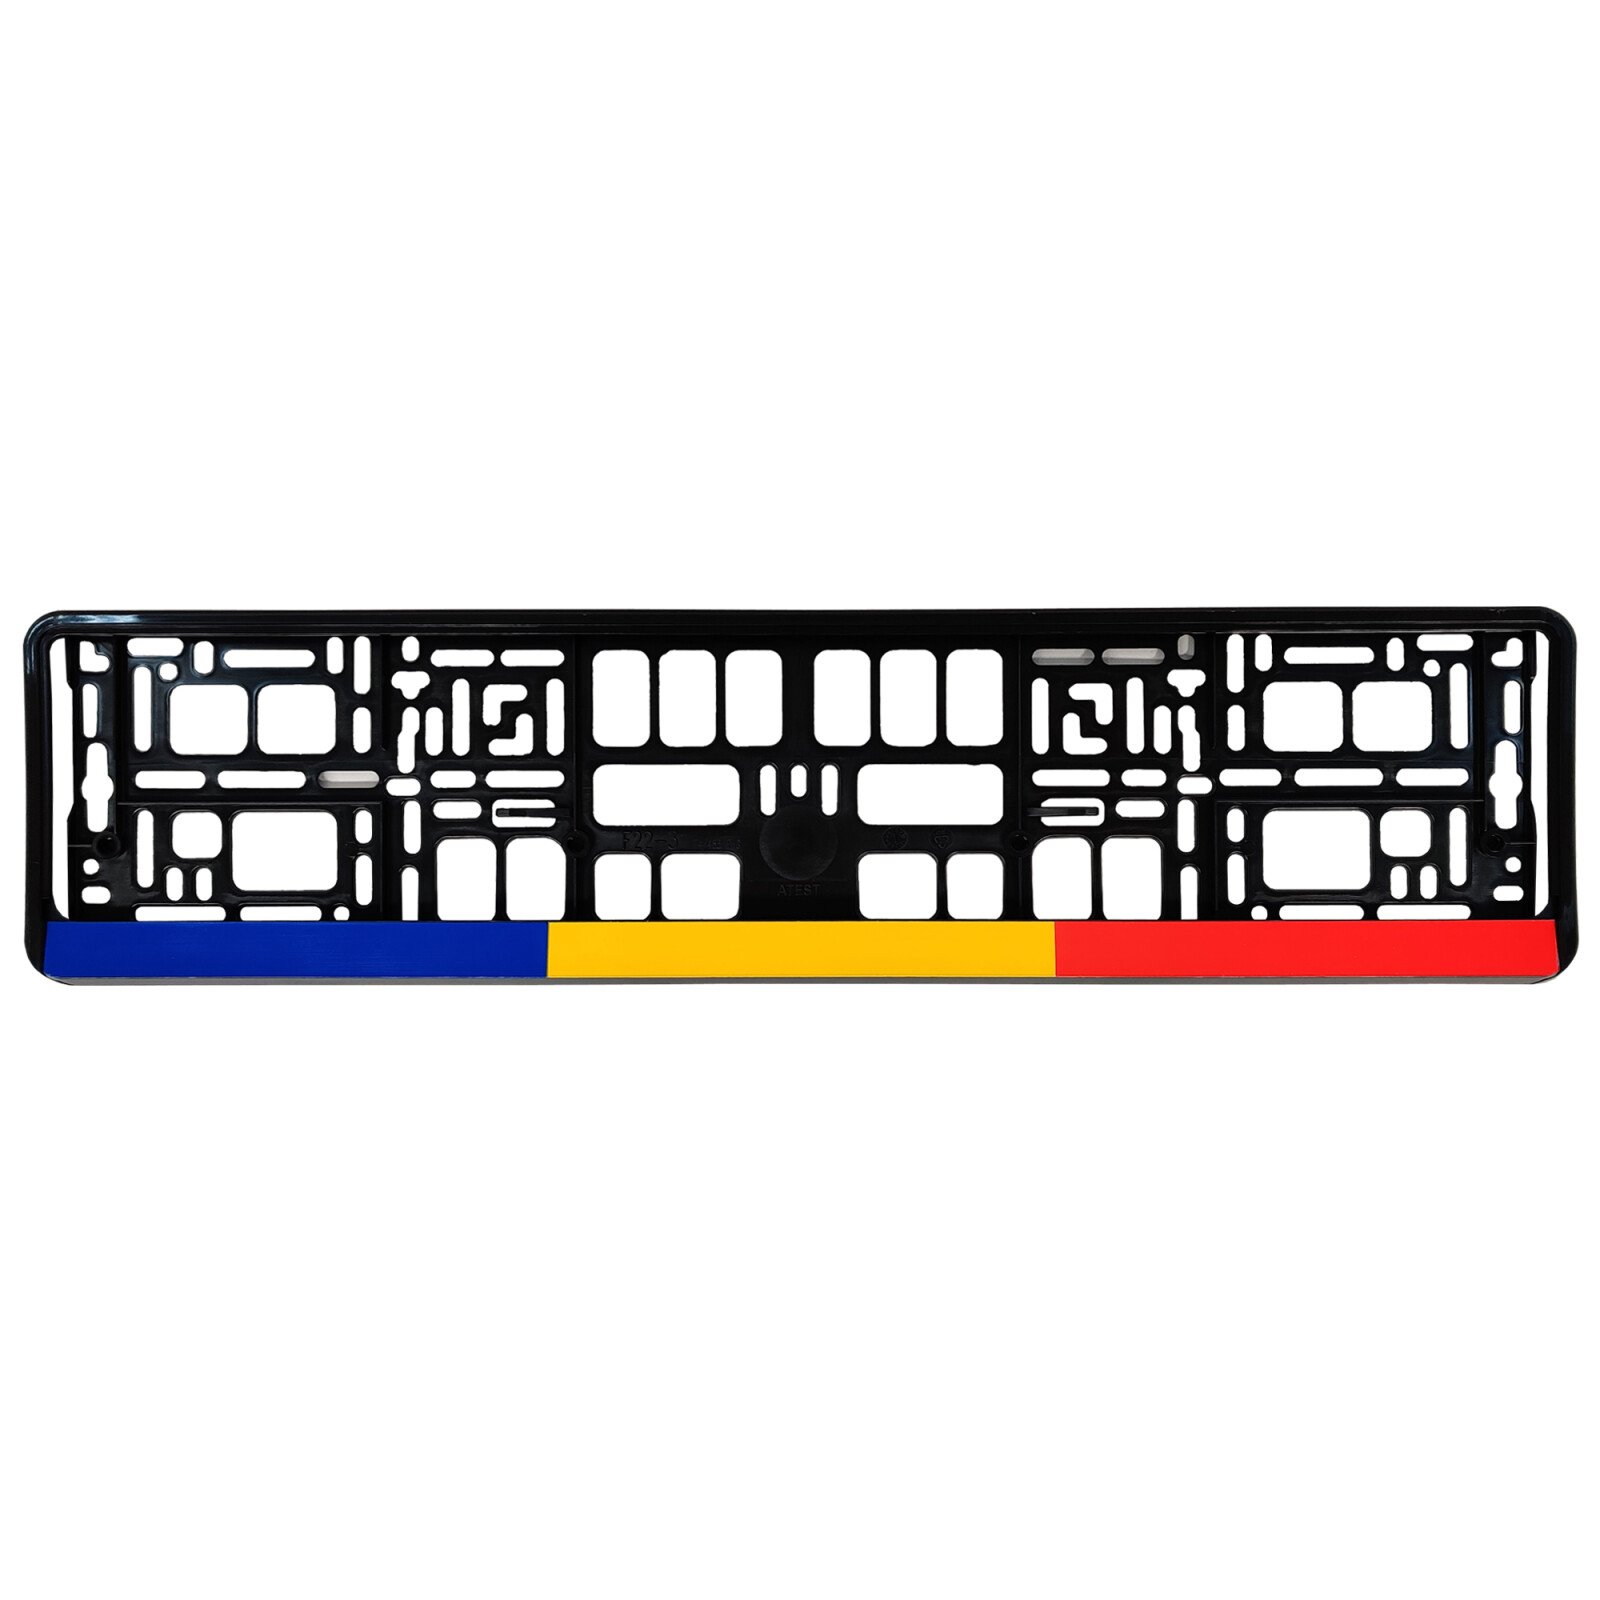 Set of 2pcs numbers plates holders - Romania thumb